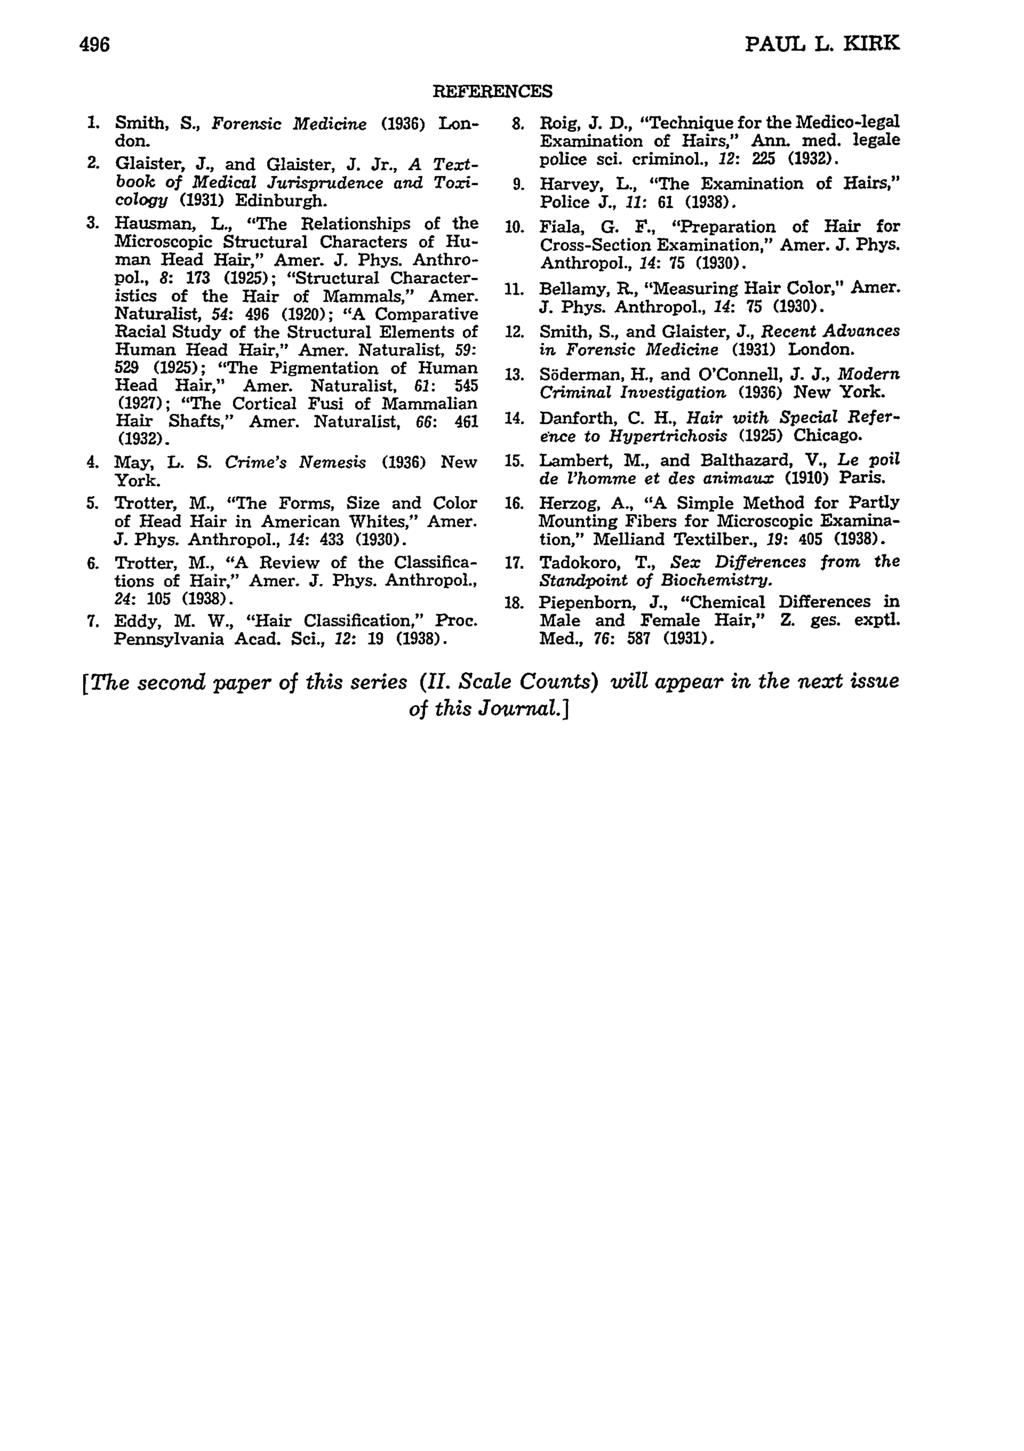 1. Smith, S., Forensic Medicine (1936) London. 2. Glaister, J., and Glaister, J. Jr., A Textbook of Medical Jurisprudence and Toxicology (1931) Edinburgh. 3. Hausman, L.